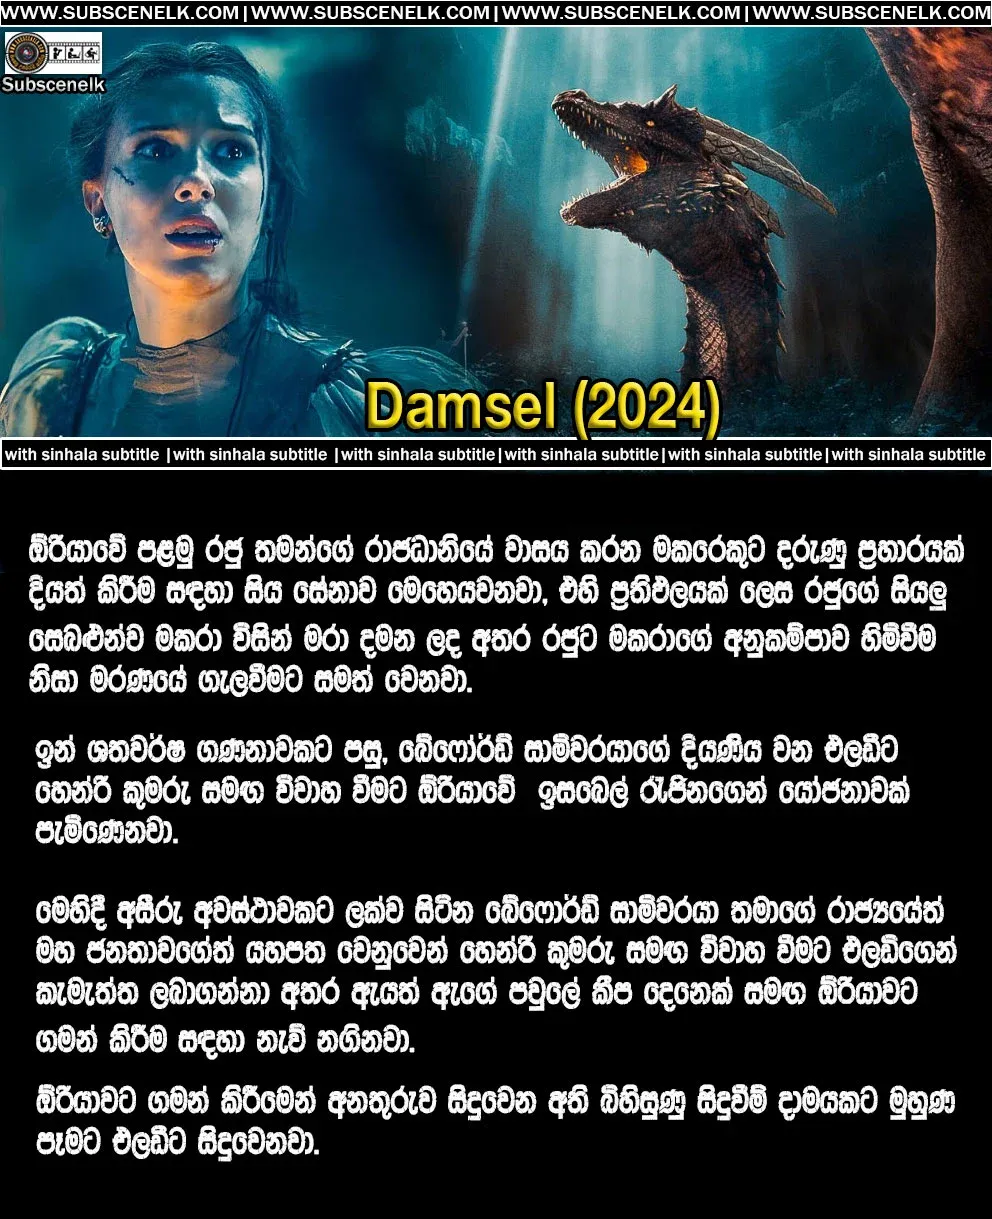 Damsel (2024) Sinhala Subtitle,Damsel (2024) Sinhala Sub,Damsel Sinhala Subtitle,Damsel Sinhala Sub,Damsel (2024) Cast,Damsel (2024) Crew,Damsel (2024) Review,Damsel (2024) Box Office,Damsel (2024) English Subtitle,Damsel (2024) English Sub,Damsel English Sub,Damsel English Subtitle,Princess Elodie, Millie Bobby Brown, dark fantasy film, Juan Carlos Fresnadillo, Dan Mazeau, Netflix release, March 8, 2024, dragon, chasm, Queen Isabelle, betrayal, survival, marriage proposal, escape, adventure, ancient ritual, sacrifice, deception, bravery, rescue party, confrontation, familial bond, glowing worms, cave, perilous journey, royal sacrifices, dead dragon hatchlings, rescue mission, diversion, Aurean scheme, revelation, empowerment, triumph, mixed reviews, Rotten Tomatoes, Metacritic, Mick LaSalle, Peter Debruge, Kate Erbland, San Francisco Chronicle, Variety, IndieWire,damsel movie,damsel,movie damsel,damsels movie,damsel netflix,damsel millie bobby brown,damsel film,damsel trailer,damsel movie millie bobby brown,damsel movie review,the movie damsel,damsel film millie bobby brown,robert pattinson and mia wasikowska movies,damsel movie trailer,robert pattinson mia wasikowska movie